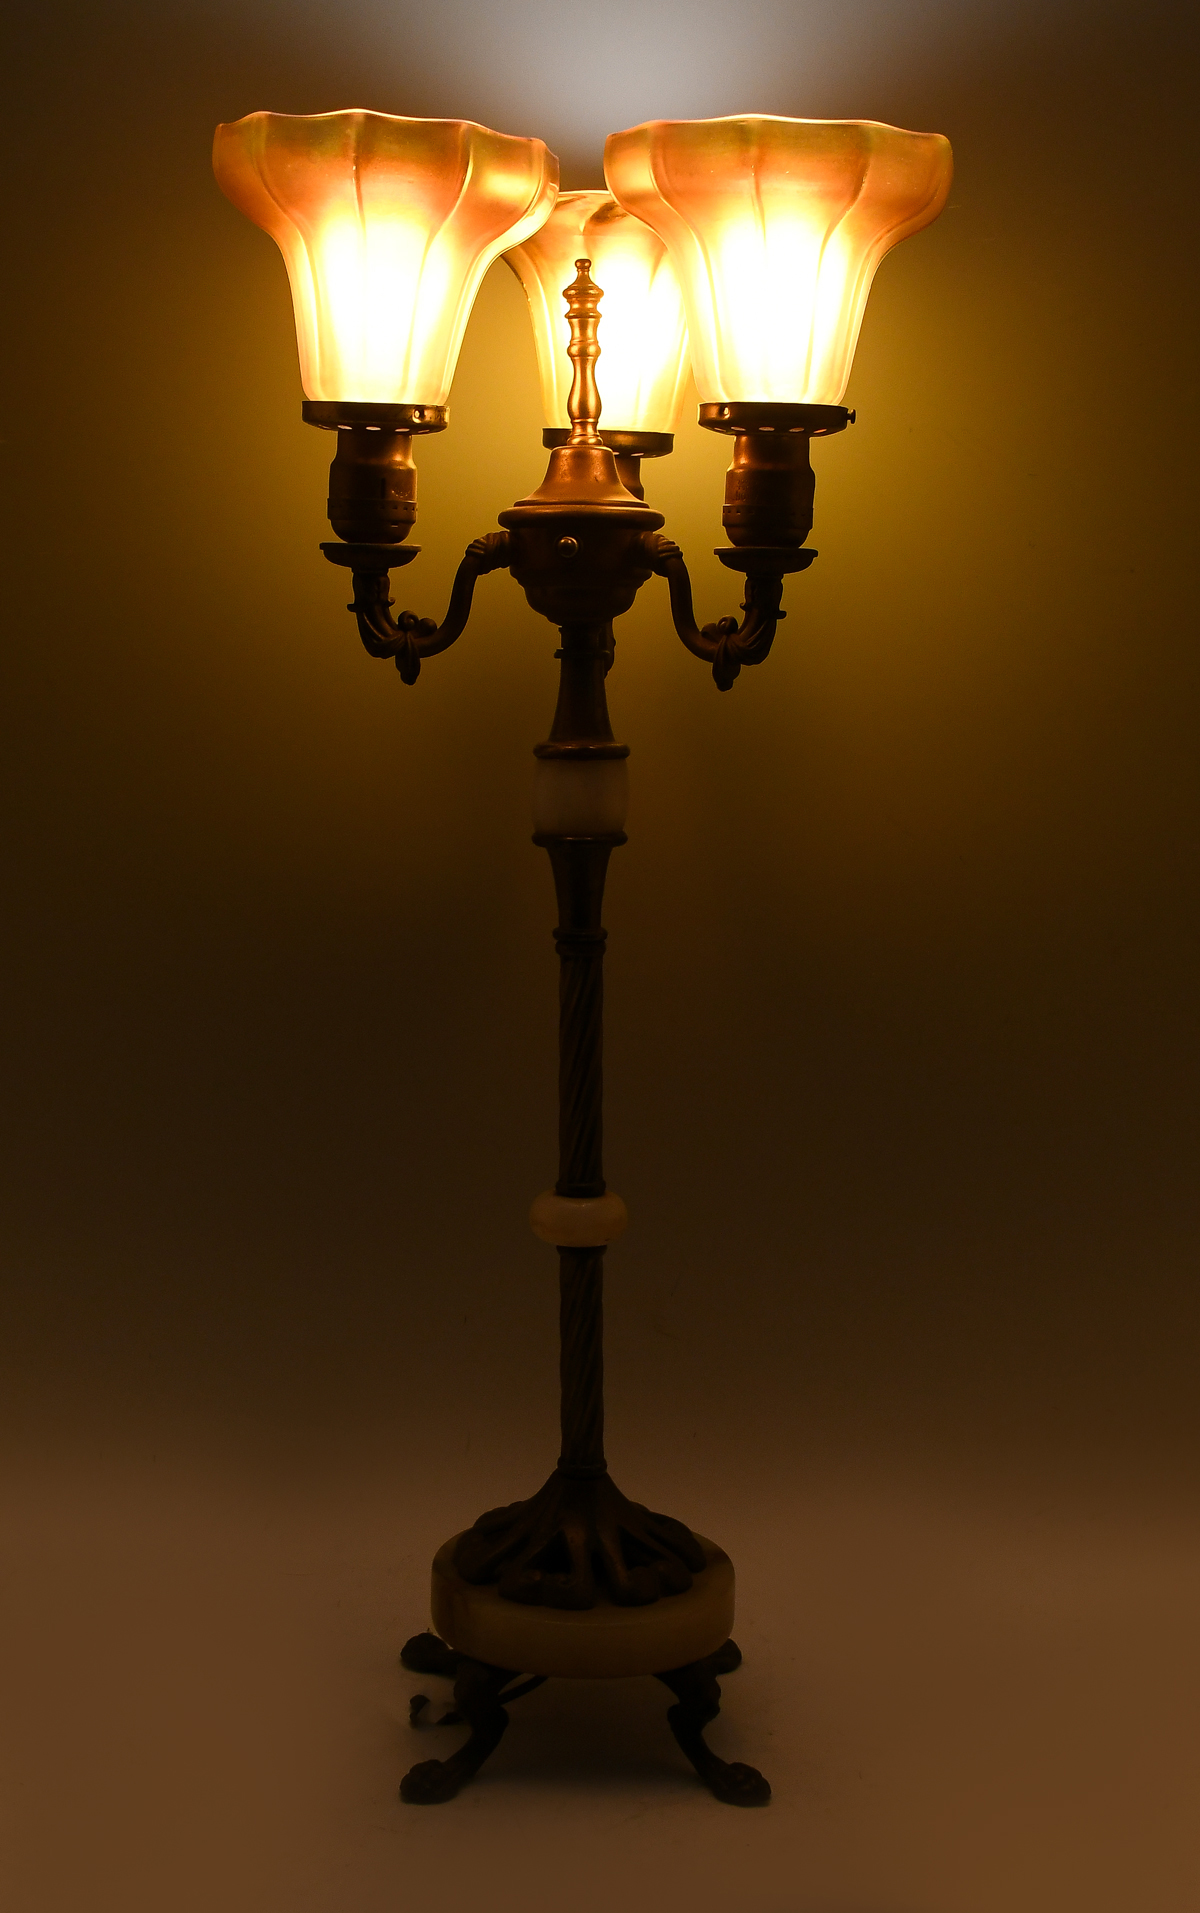 ART DECO 3 LIGHT LAMP WITH ART 36b7cc